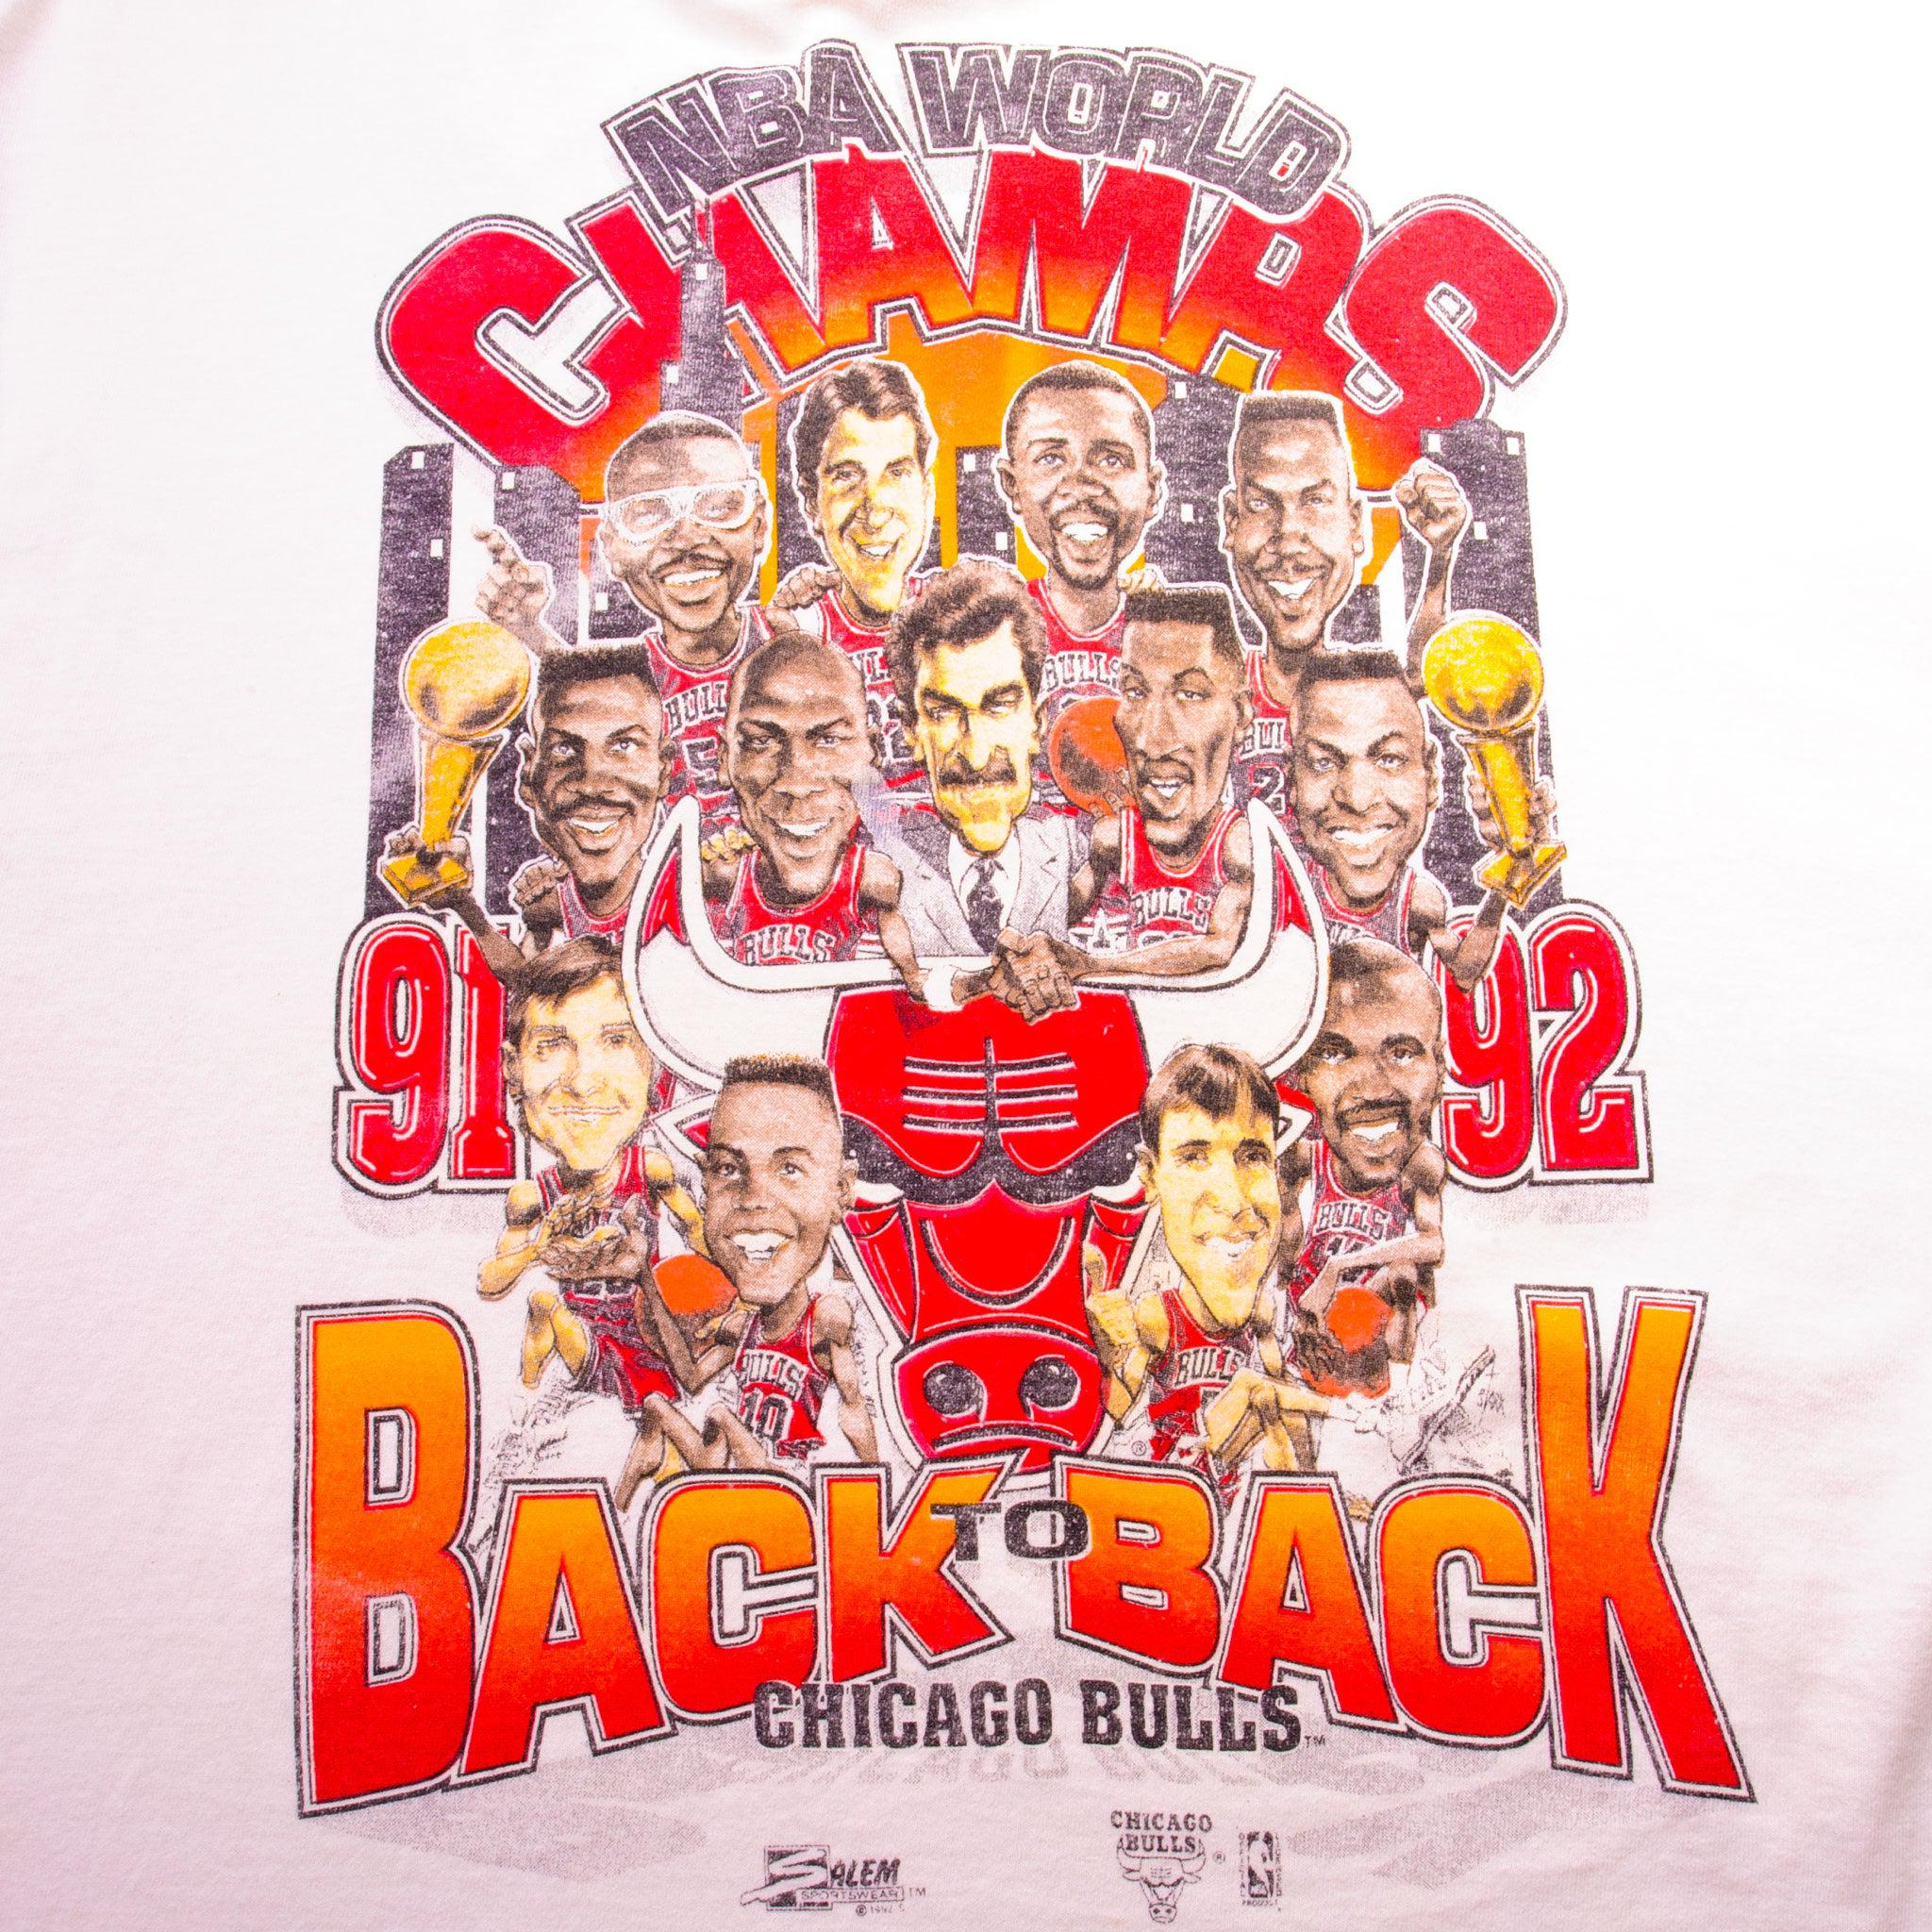 Vintage 1992 Chicago Bulls NBA Championship T-shirt NF This t